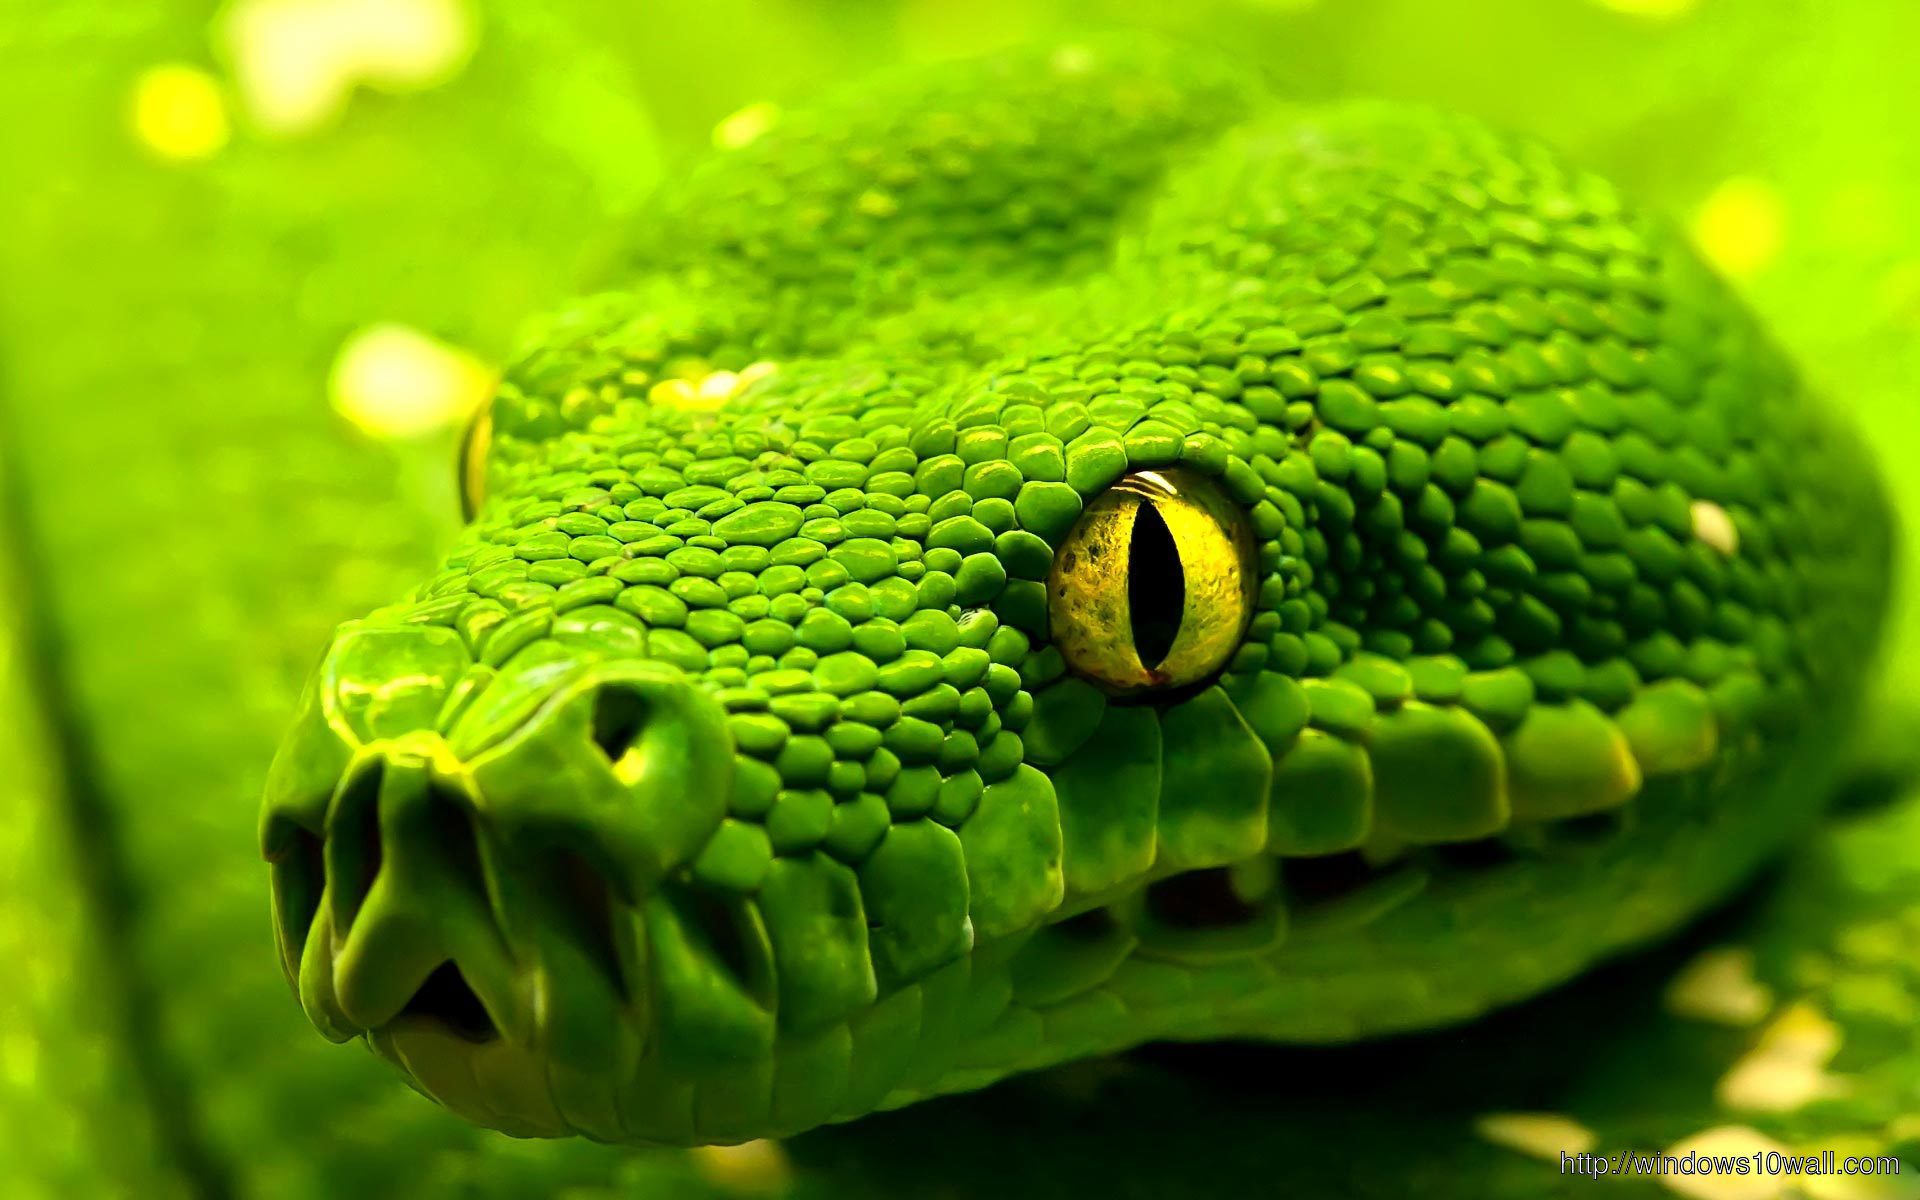 Green Snake Hd 1080p Wallpaper